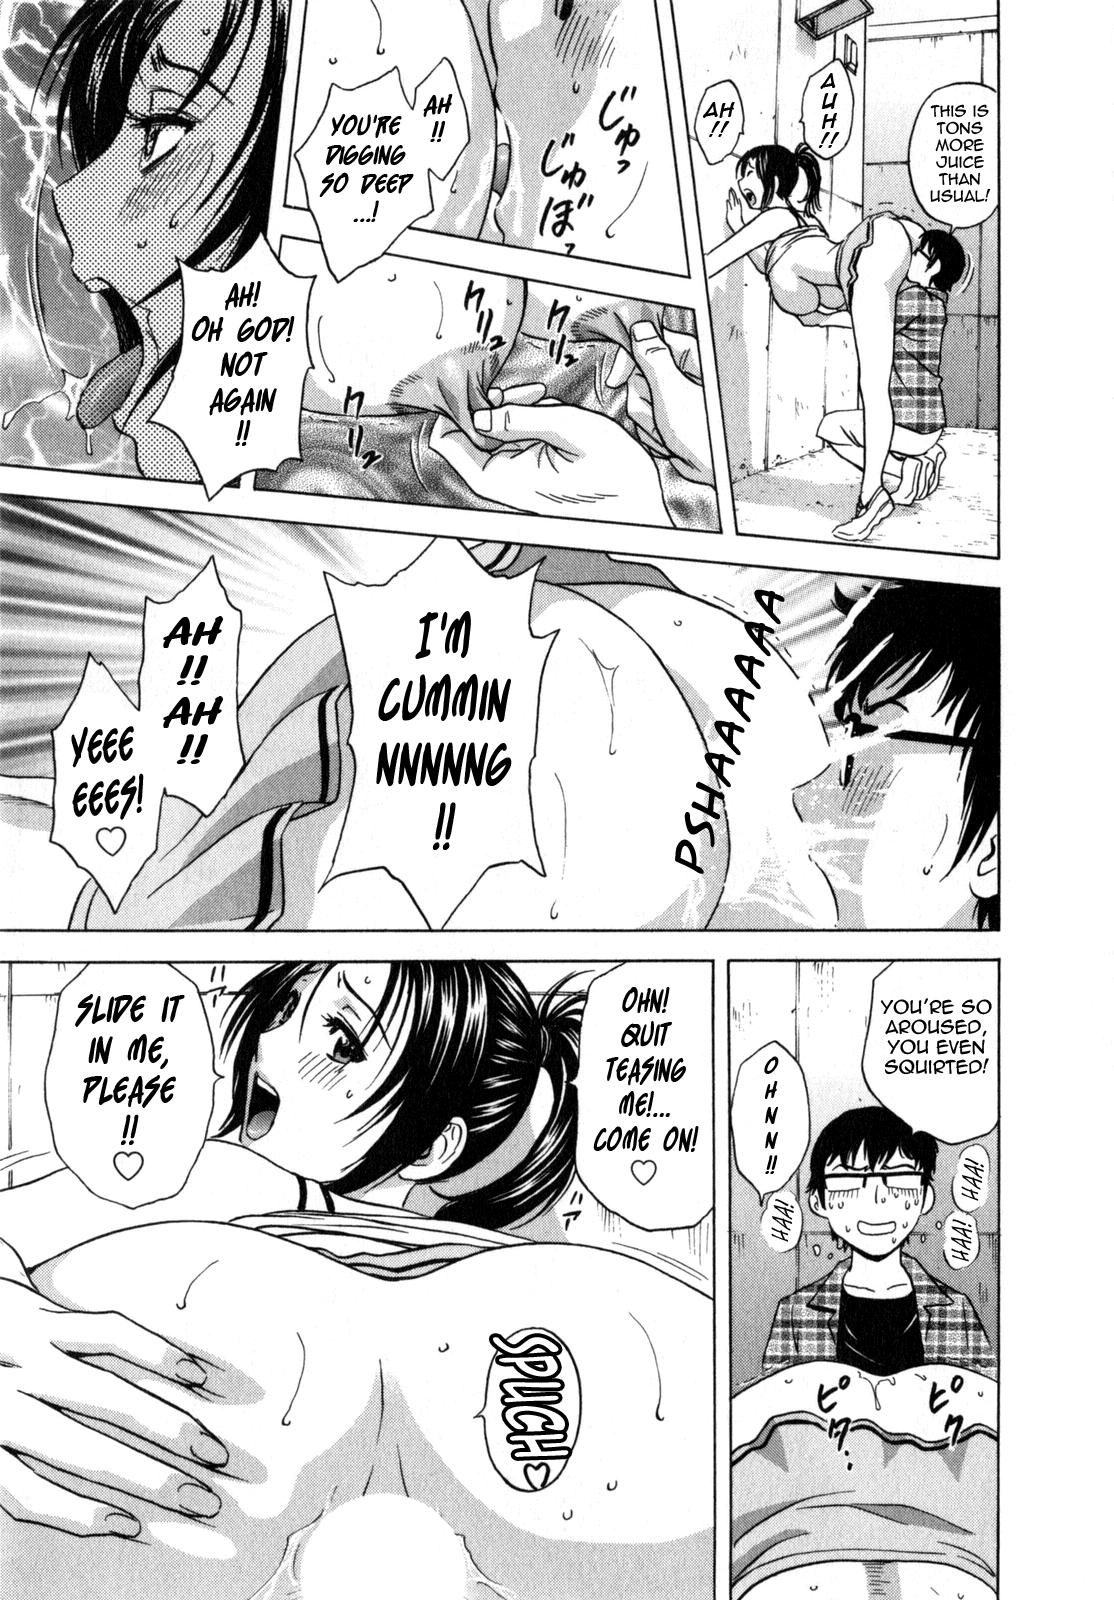 [Hidemaru] Life with Married Women Just Like a Manga 1 - Ch. 1-8 [English] {Tadanohito} 156